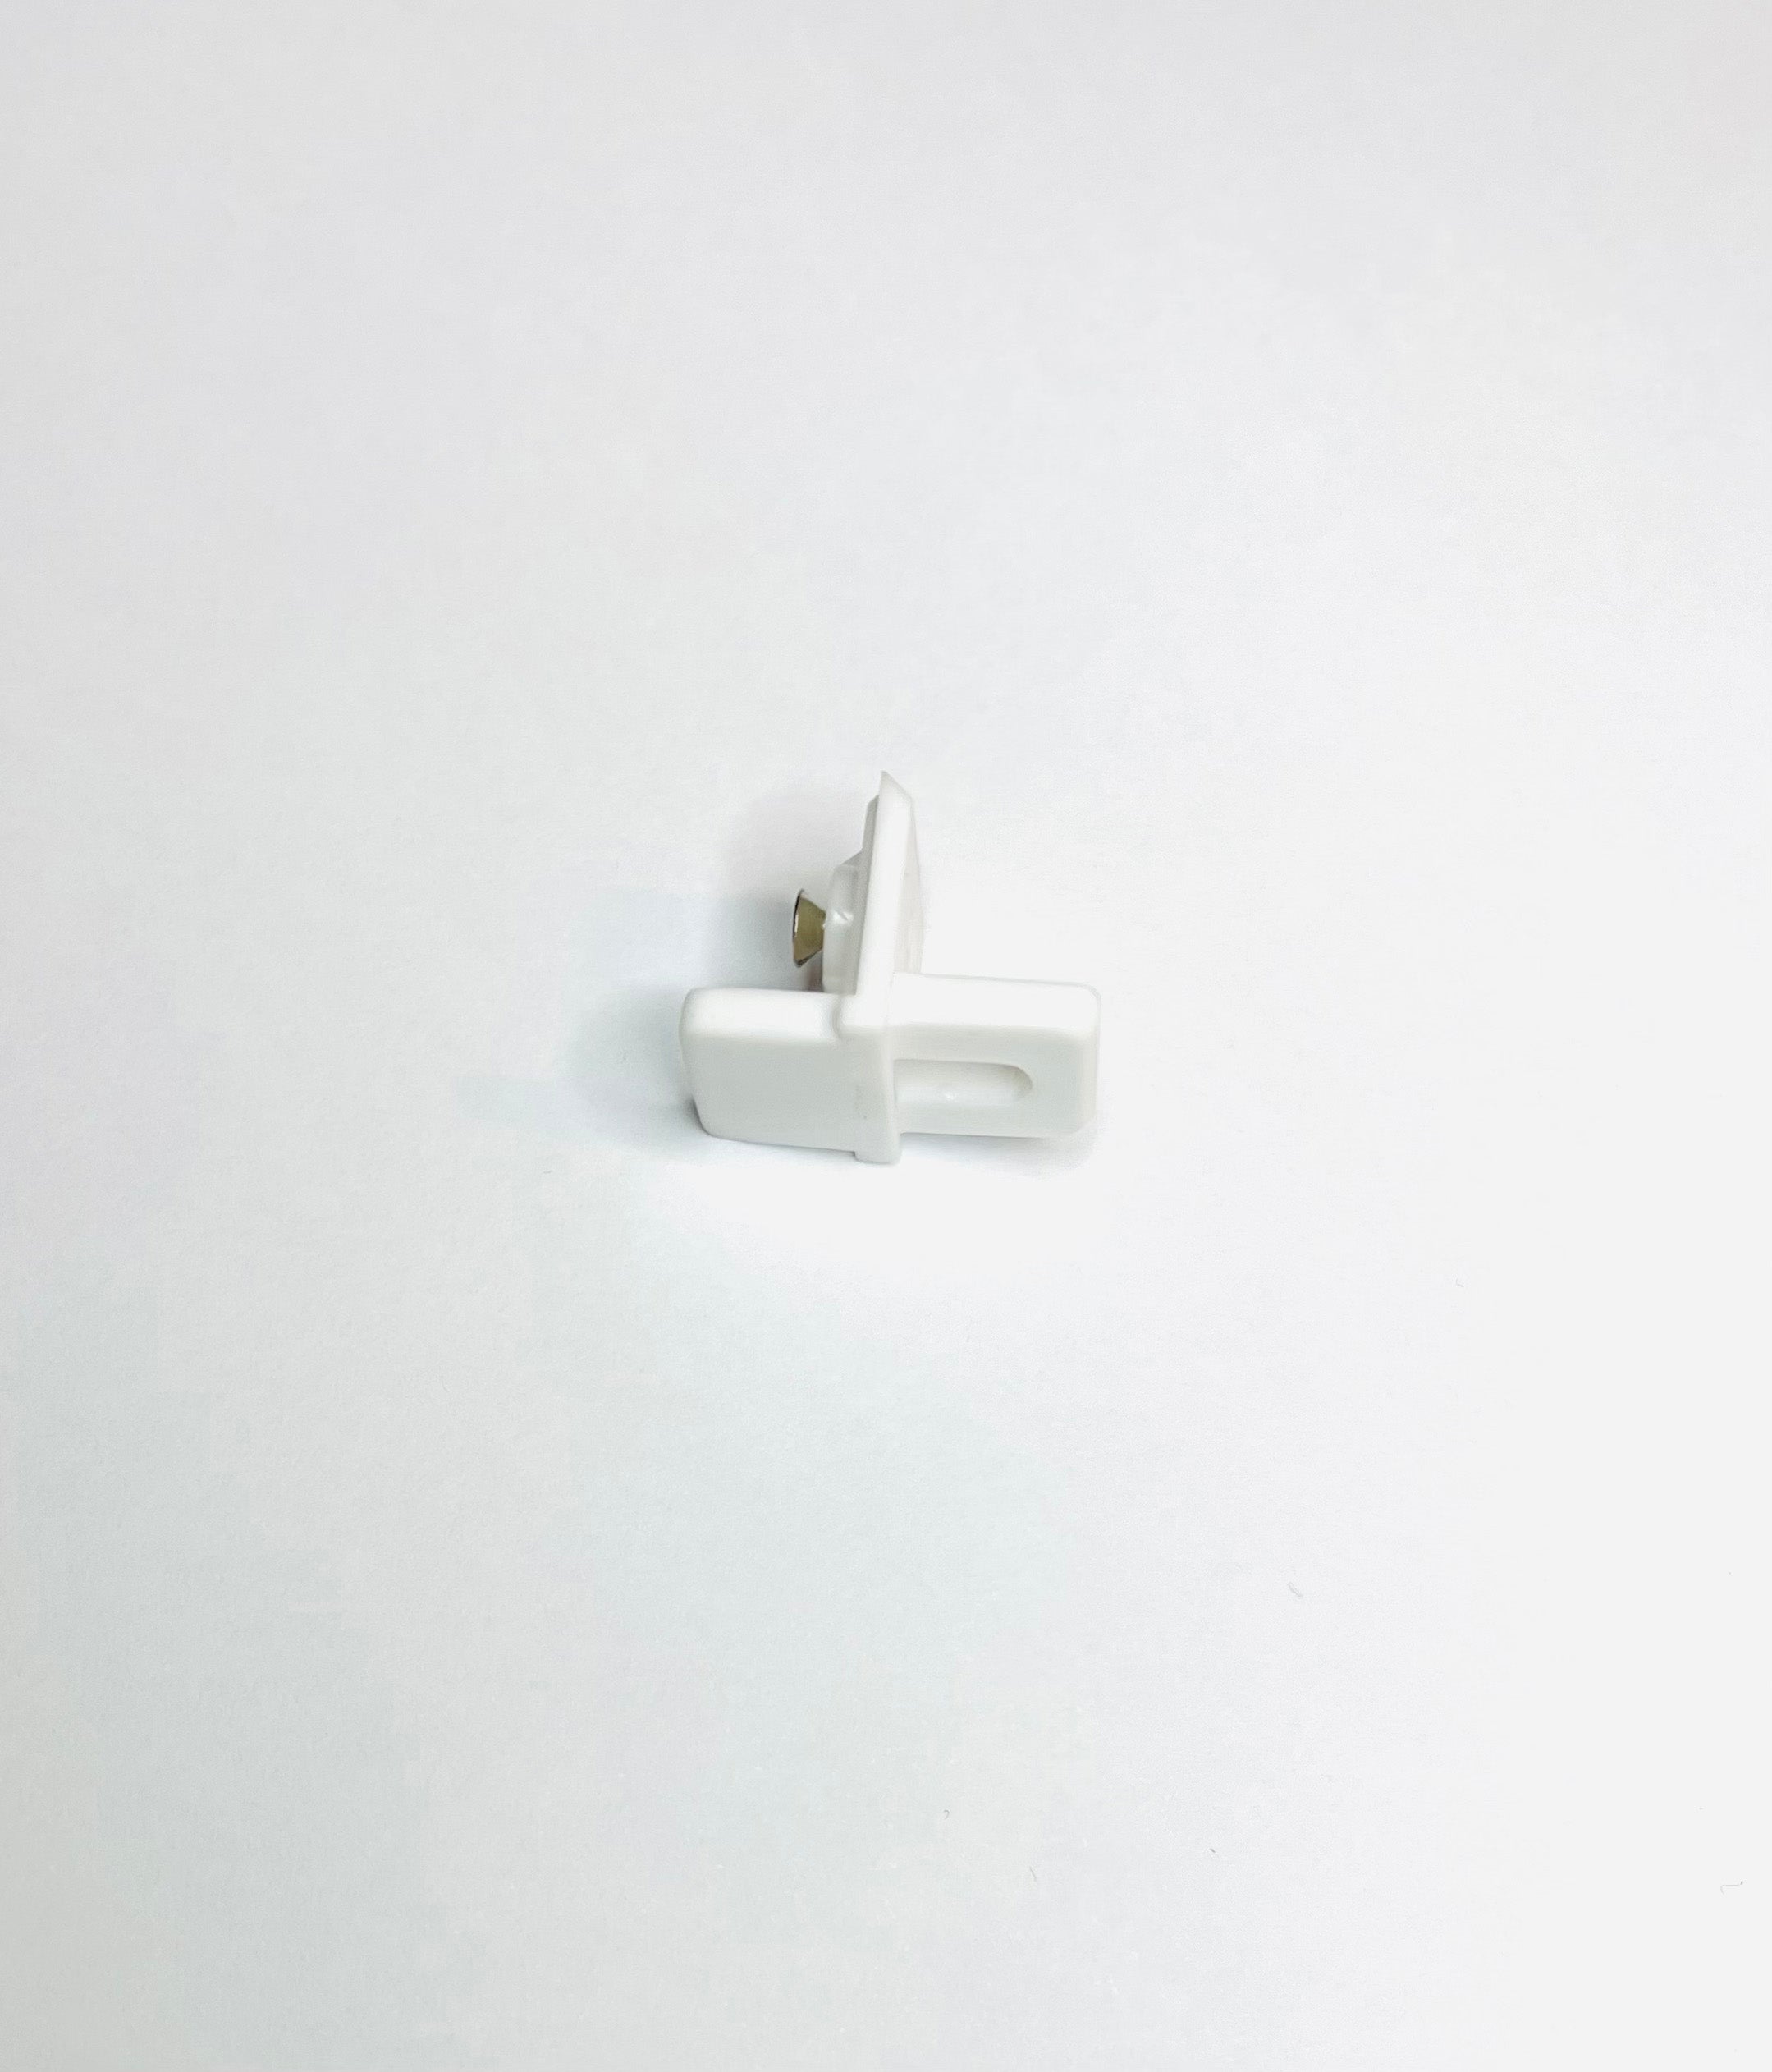 Tapa lateral en forma de T para portatelas, tapa lateral de plástico blanco con tornillo, 1 unidad, accesorios para portatelas